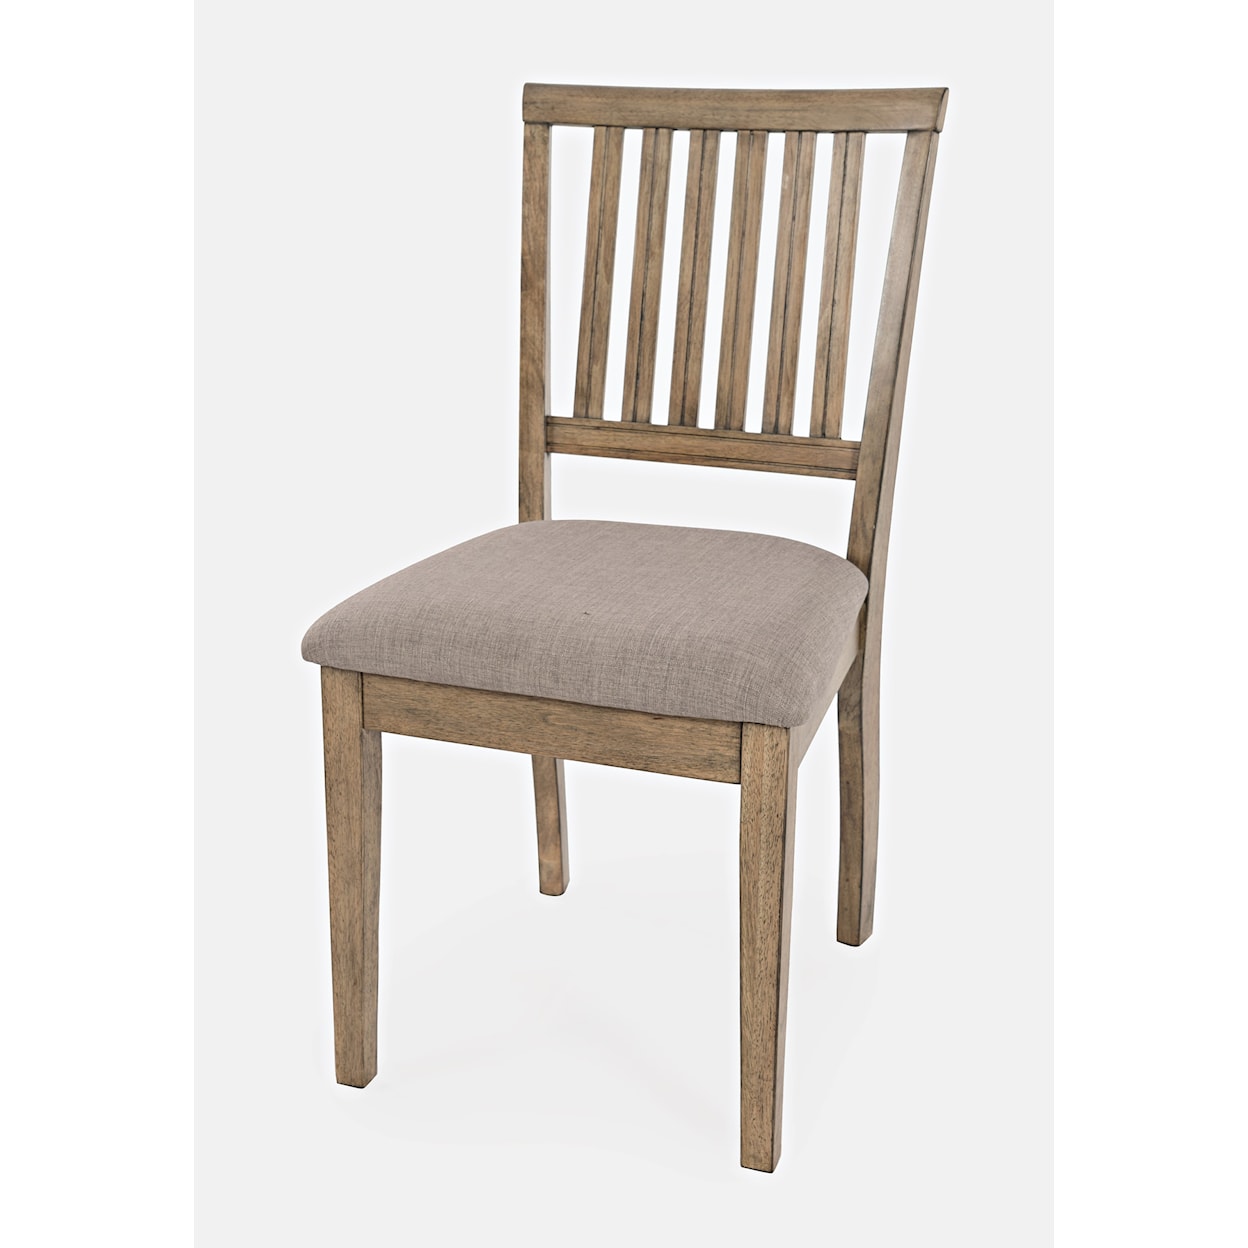 Jofran Prescott Park Slatback Chair (2/CTN)